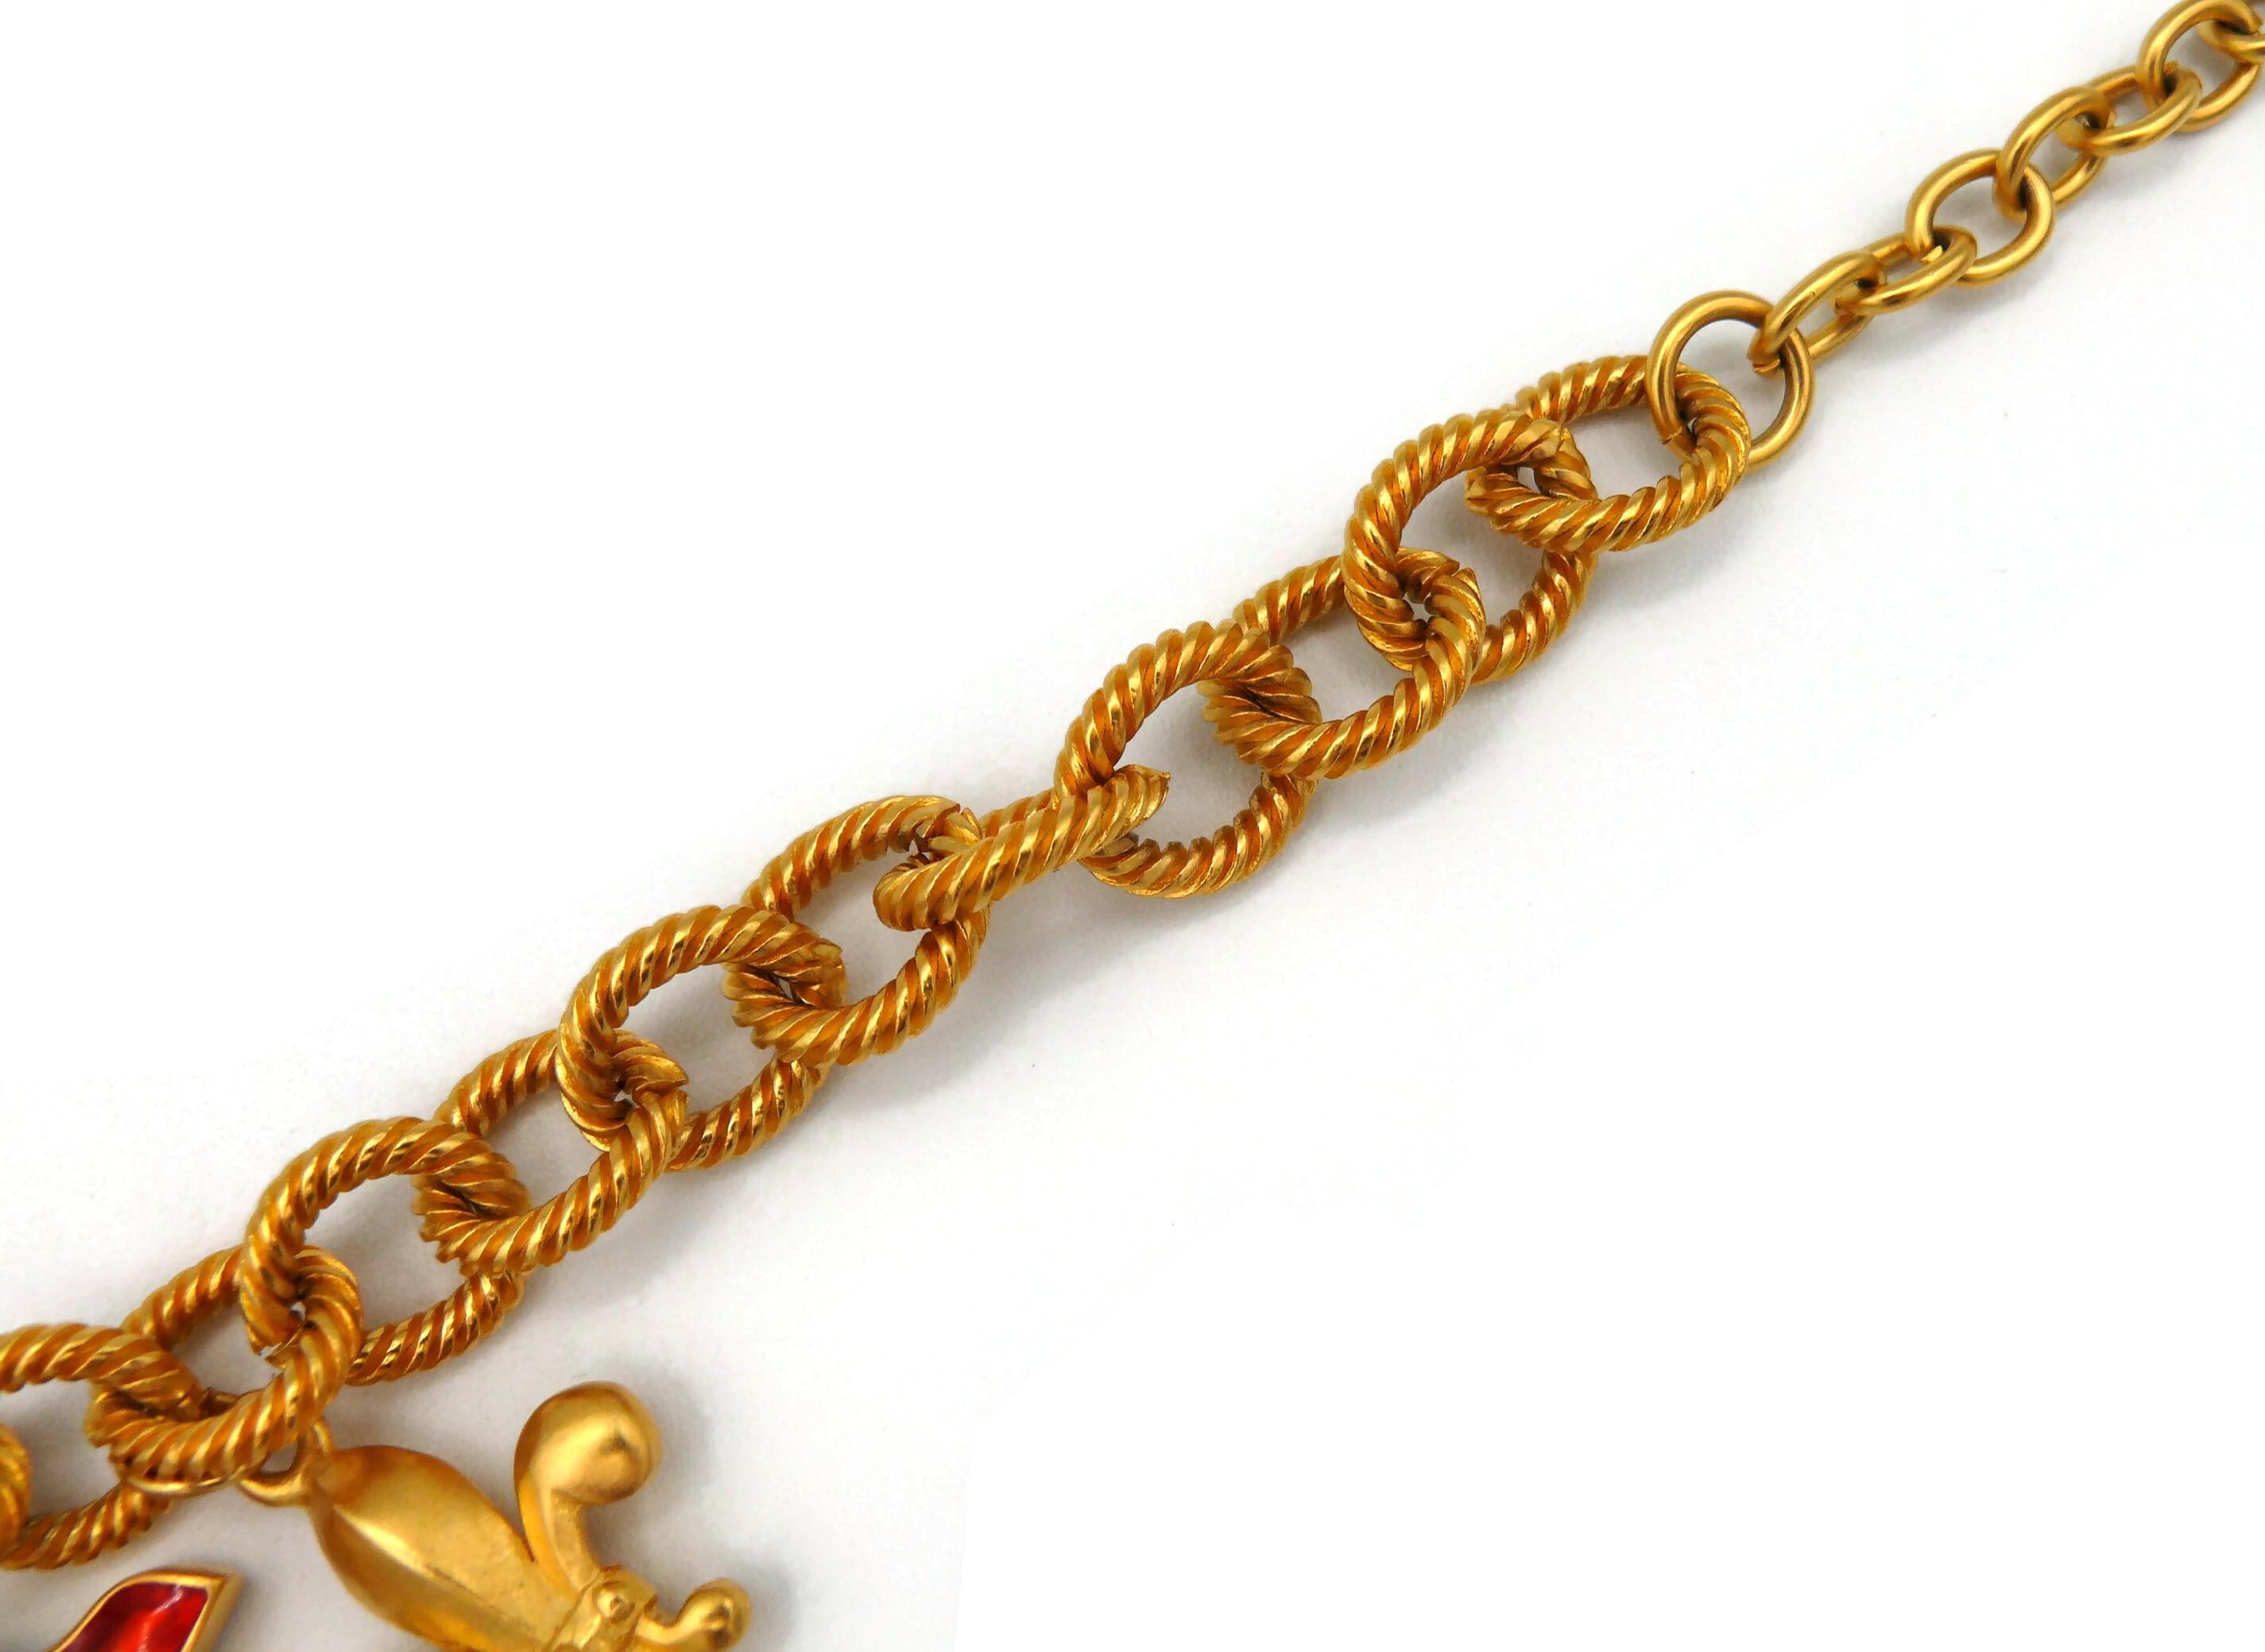 KARL LAGERFELD Vintage Paris Tribute Charm Necklace 1